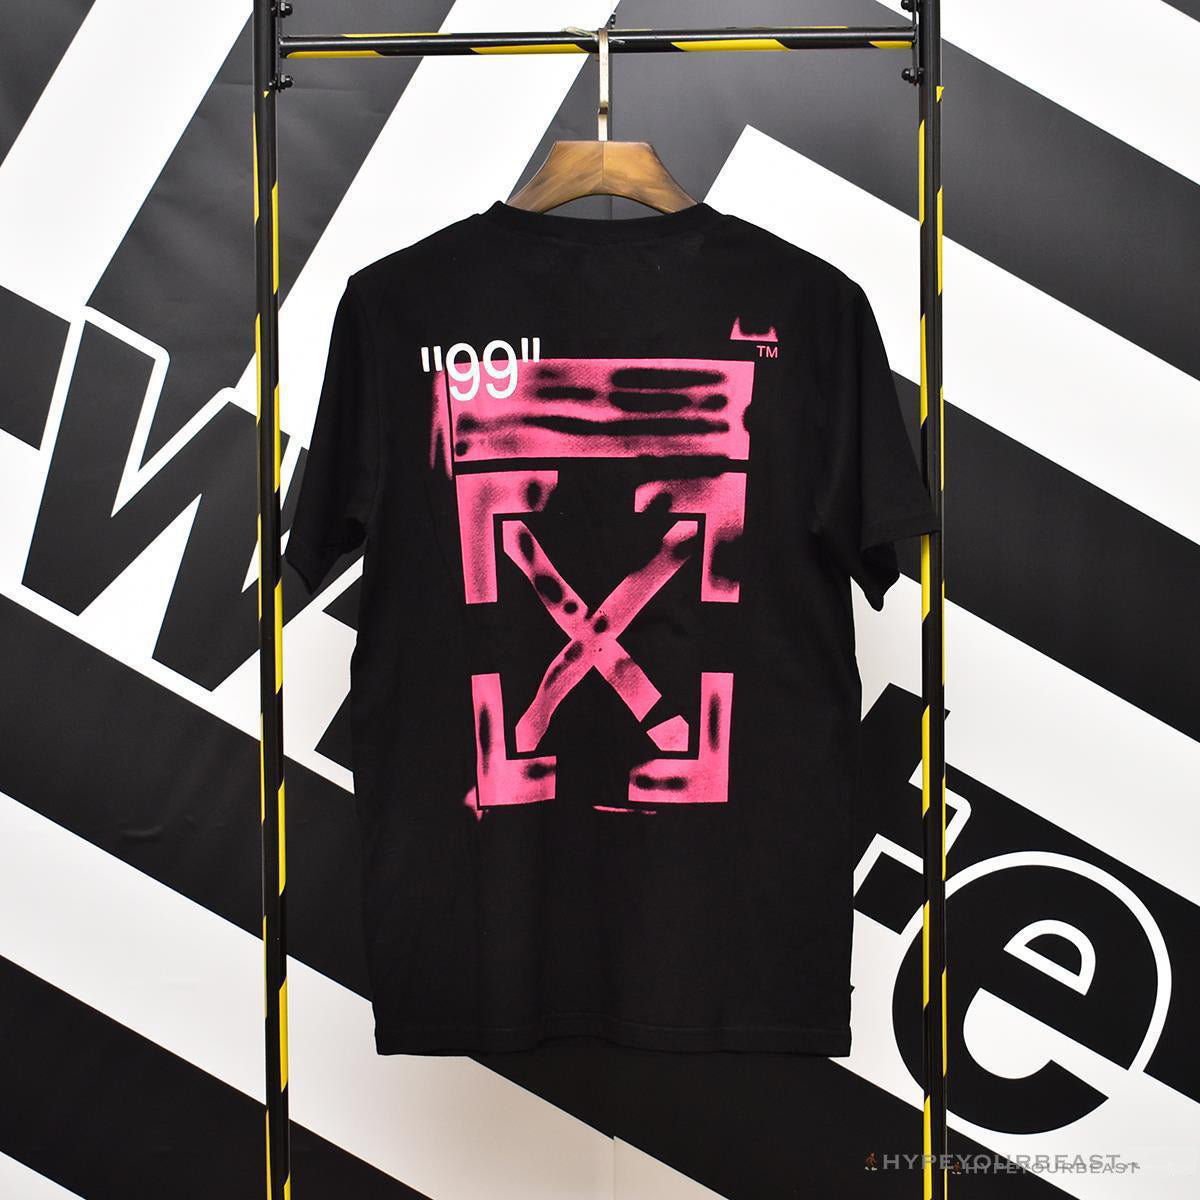 OFF-WHITE 99 Pink Arrow Tee Shirt 'BLACK'